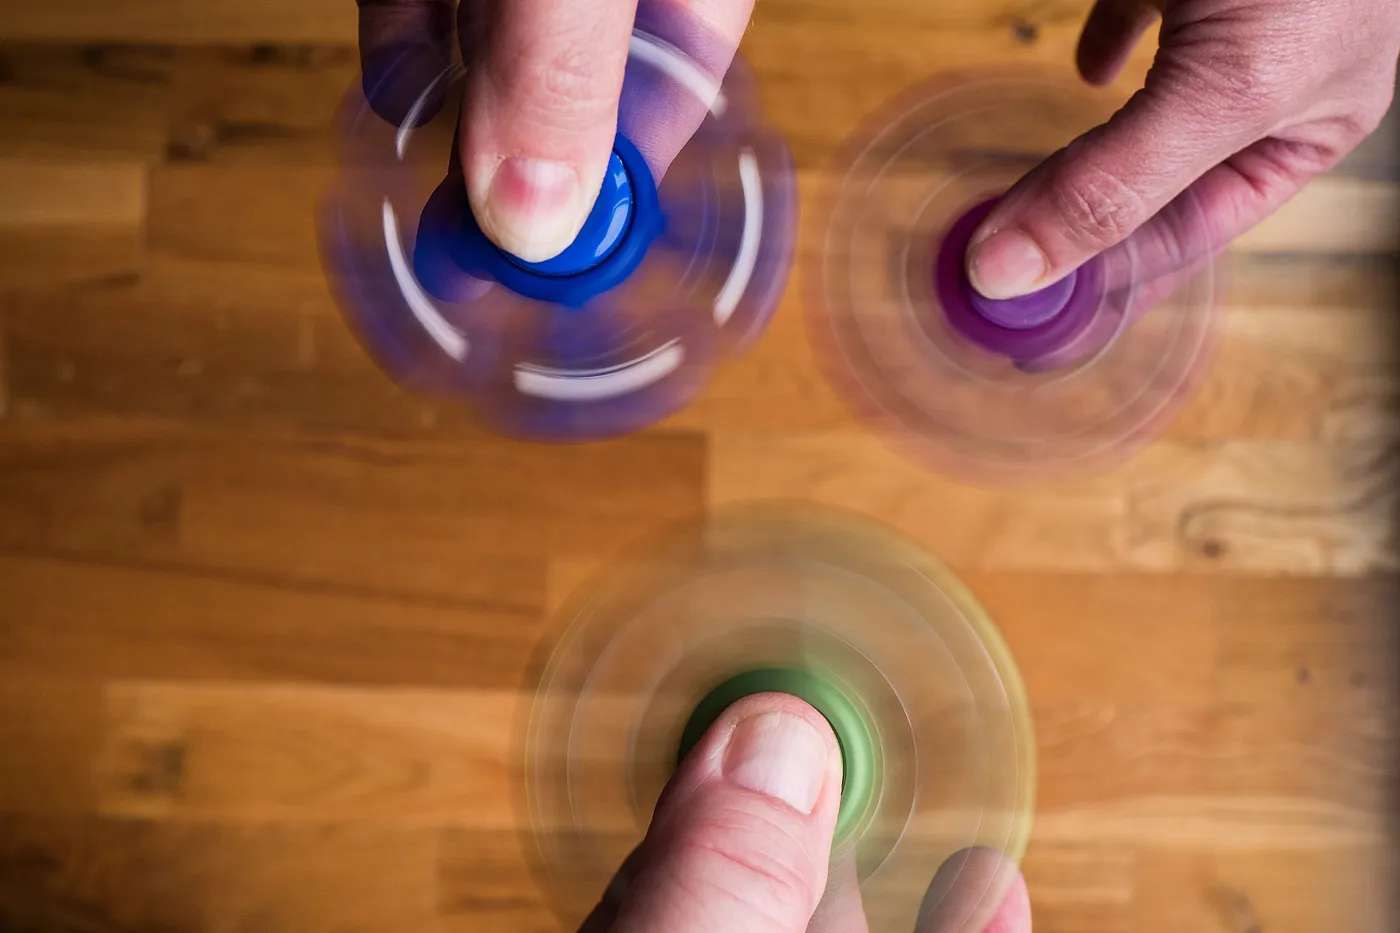 Google Spinner To Get An Interactive Fidget Spinner